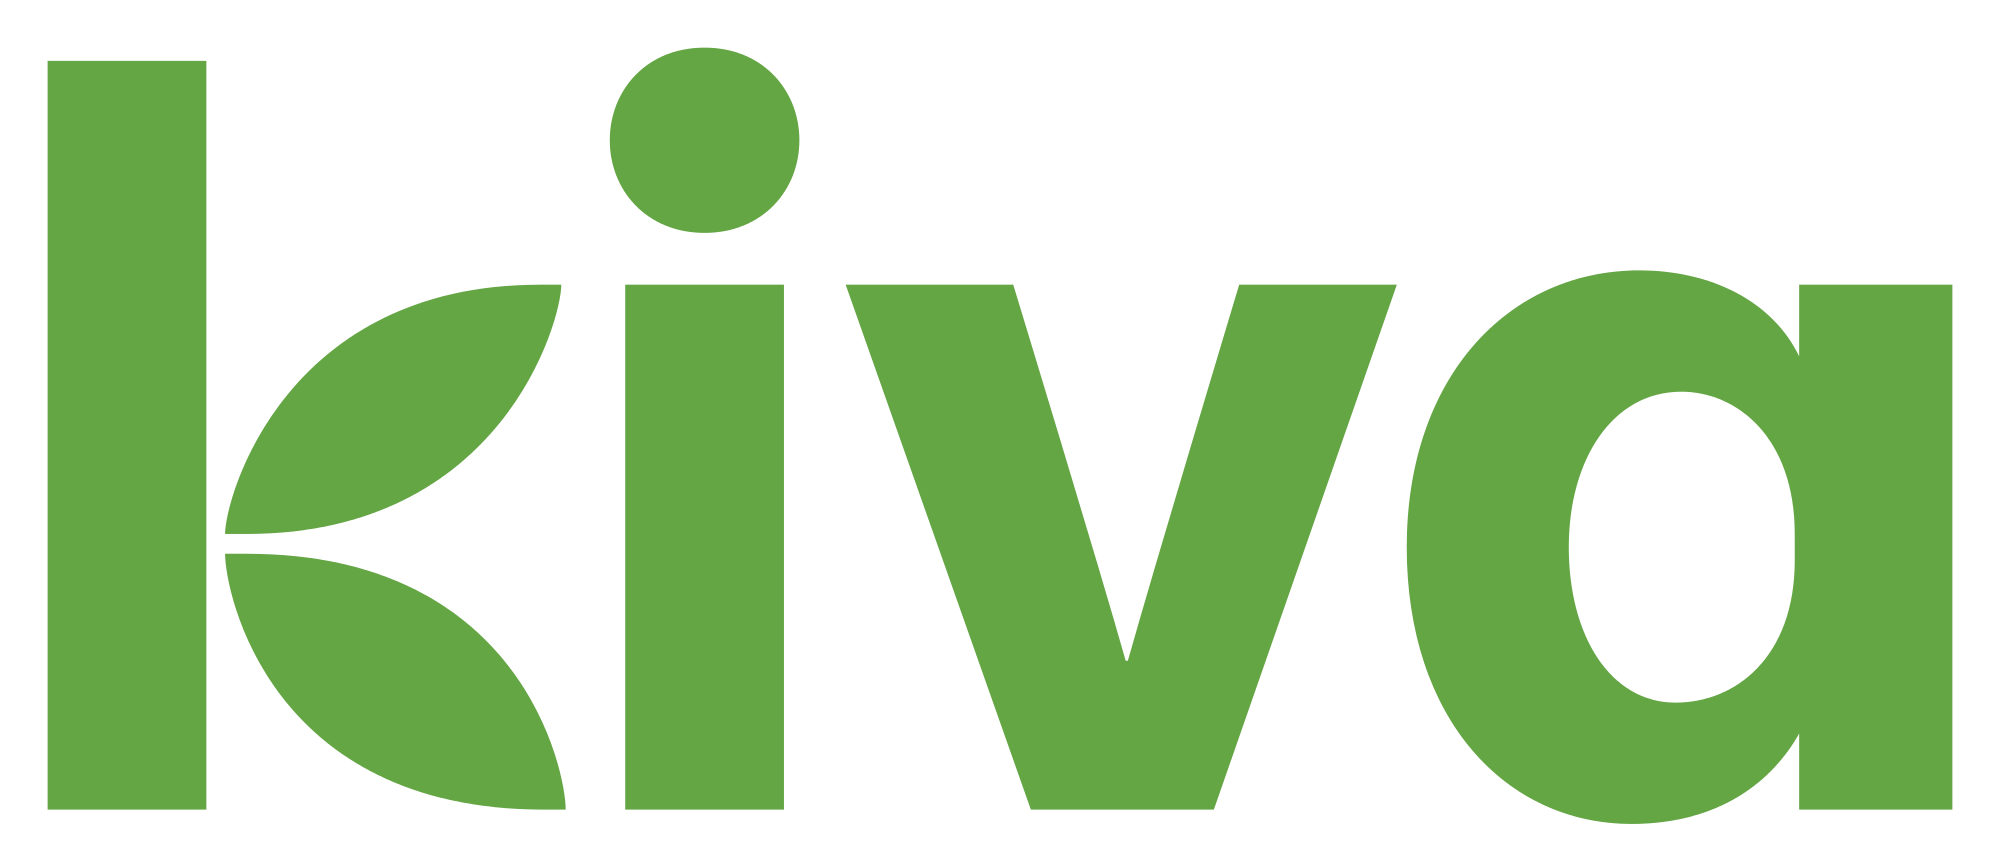 Kiva Logo - Kiva.org logo 2016.svg